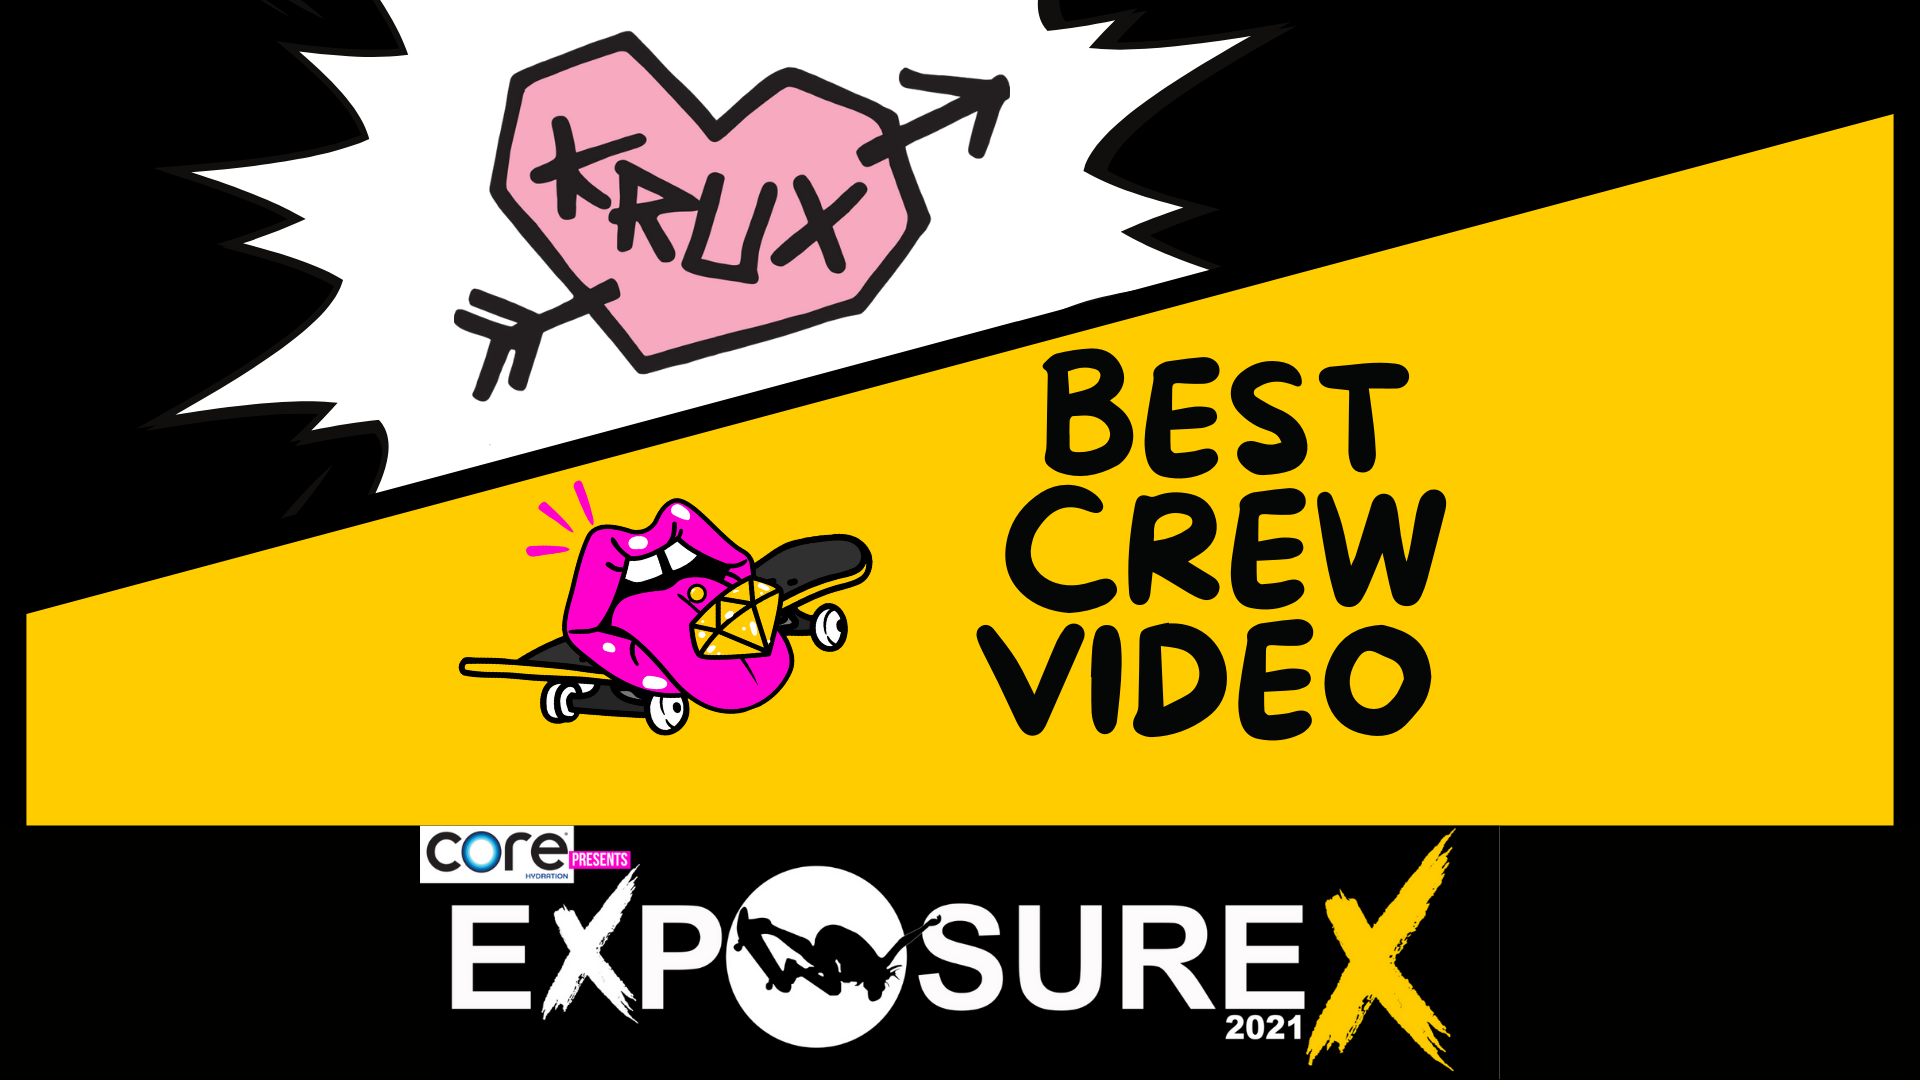 Krux Best Crew Video Opening Card